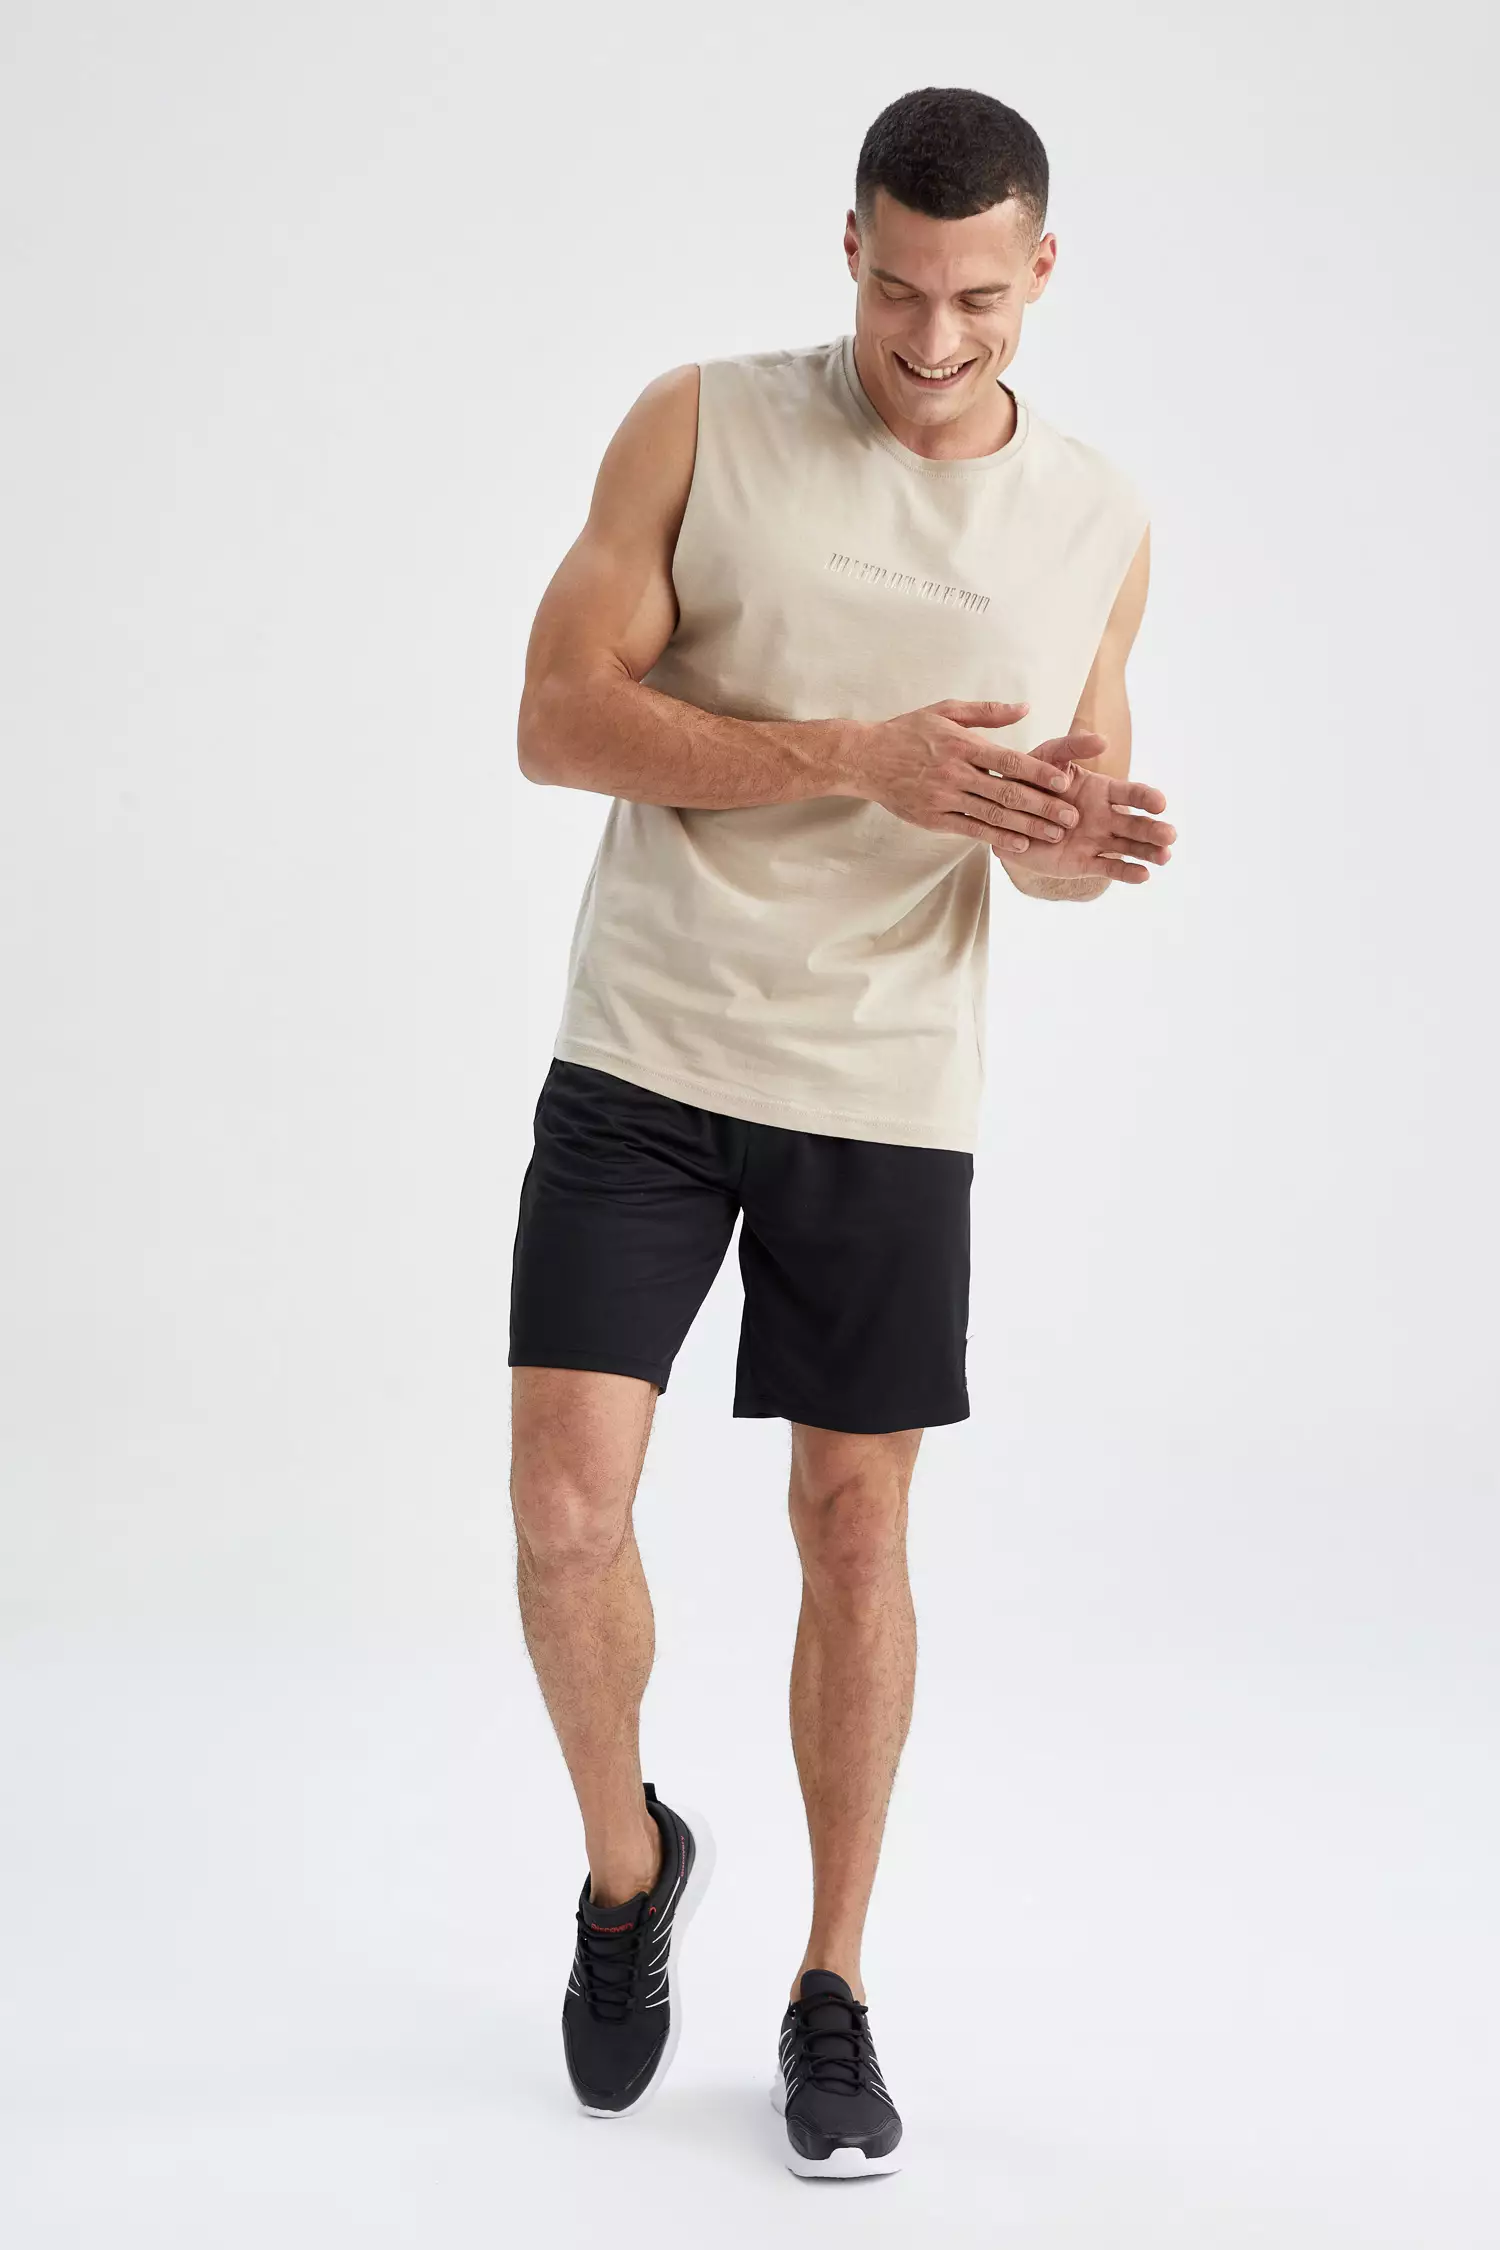 Buy DeFacto 2-Pack Regular Fit Basic Sleeveless Cotton Singlets